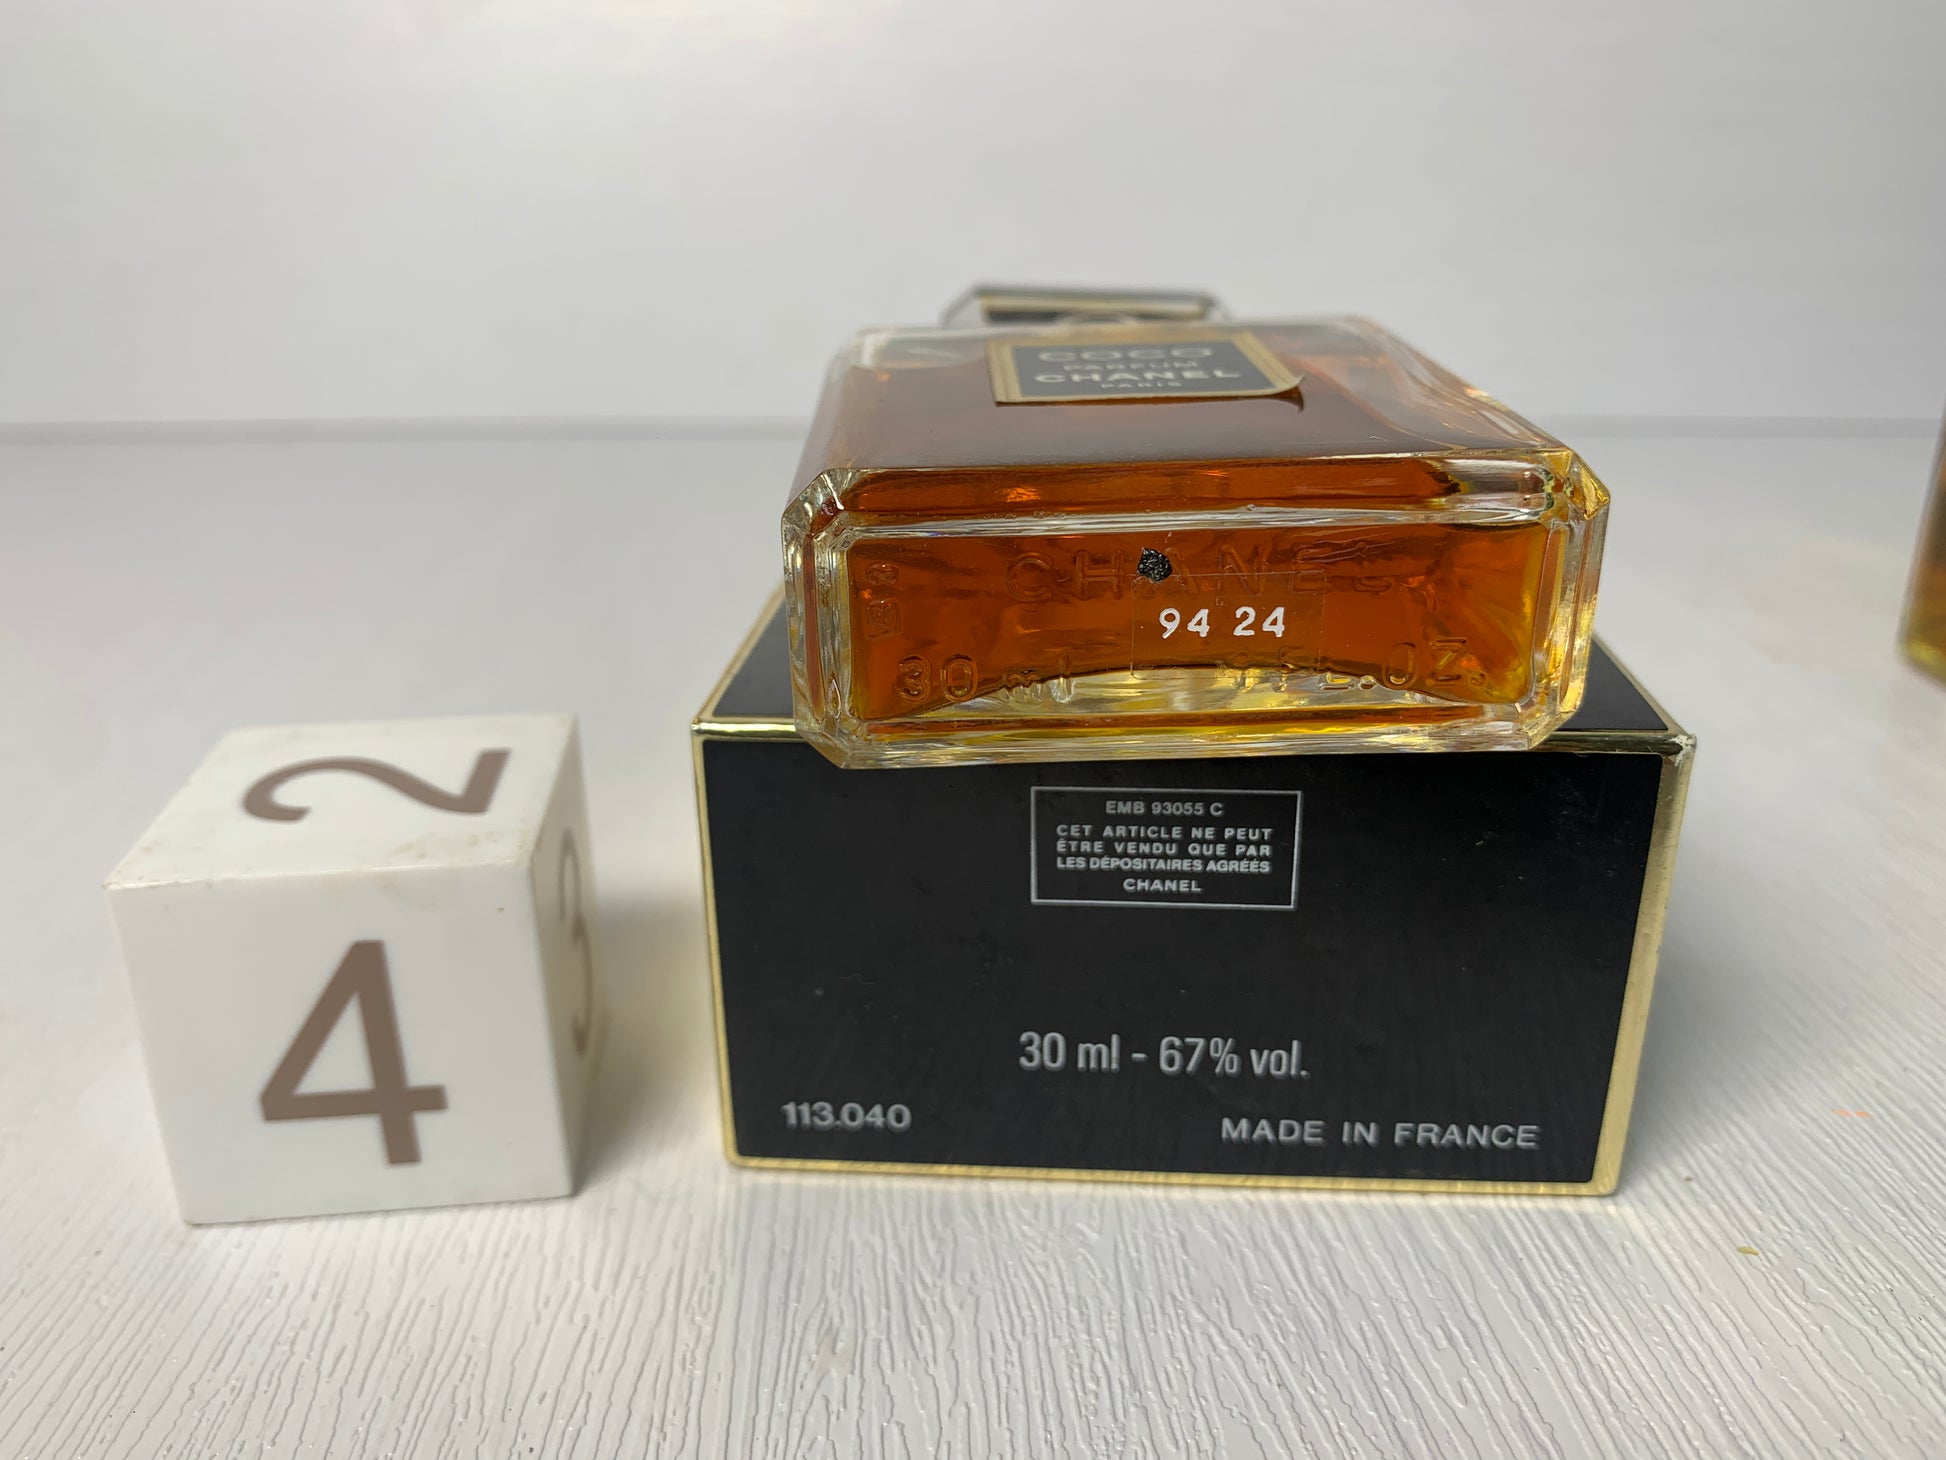 Rare Chanel coco parfum 7ml 15ml 30ml Perfume - 12FEB22 – Trendy Ground